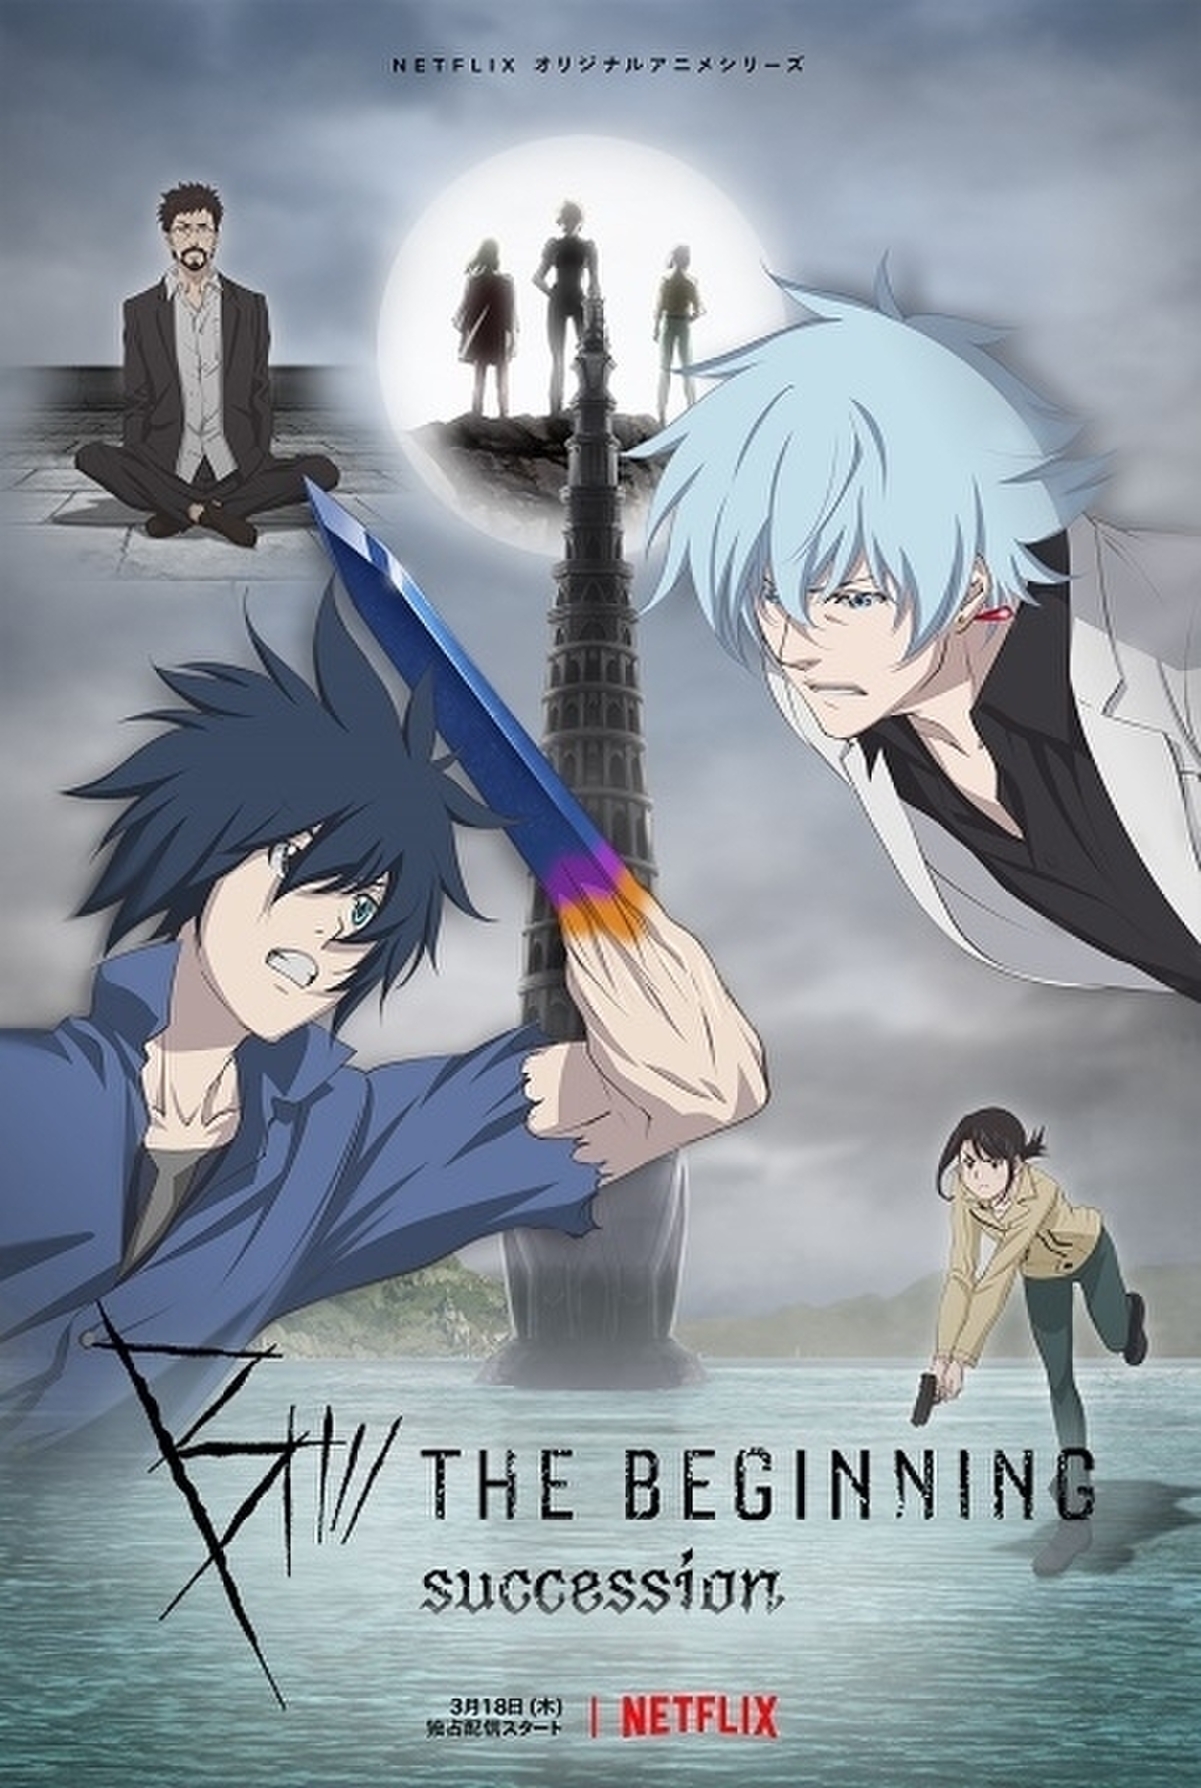 Netflixアニメ B The Beginning セカンドシーズン 3月18日配信開始 予告映像とキーアート公開 映画ニュース 映画 Com